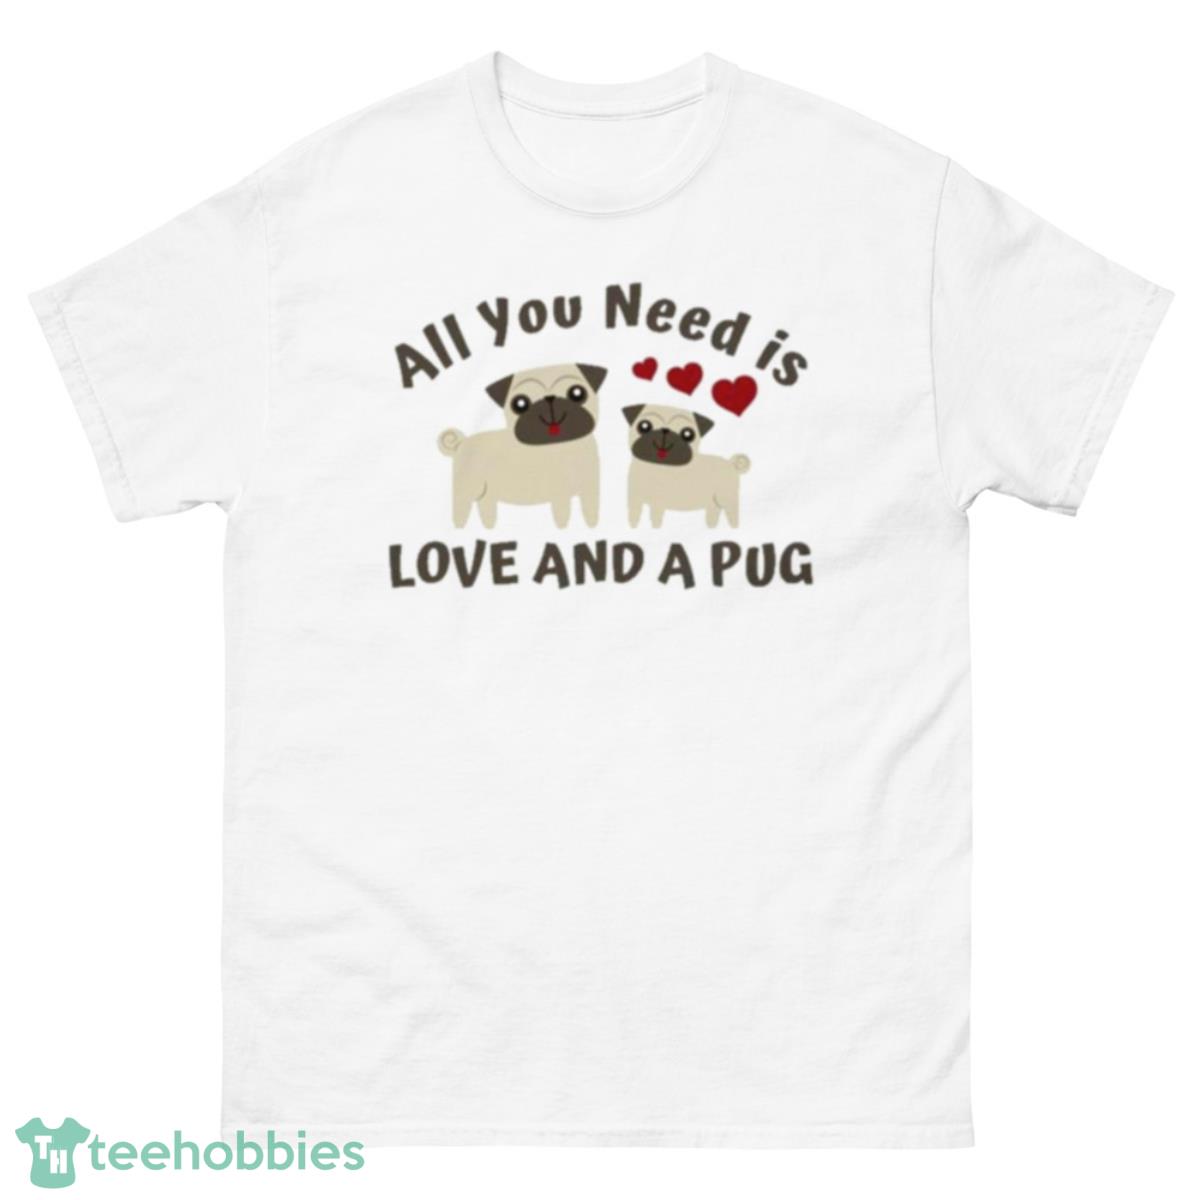 All You Need Is Love And A Pug Shirt - 500 Men’s Classic Tee Gildan